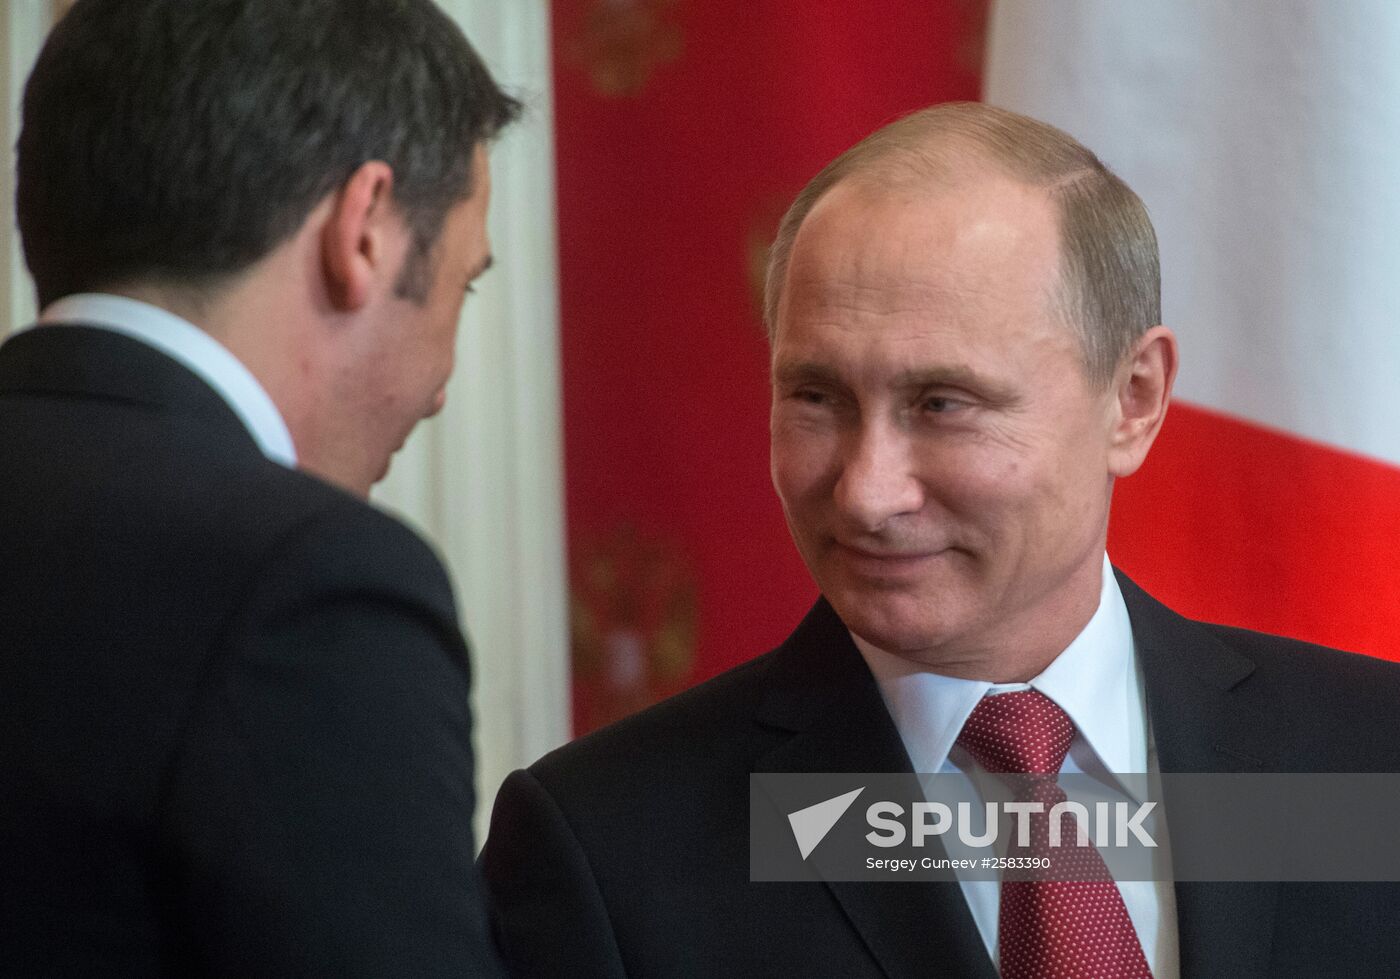 President Vladimir Putin meets with Italian Prime Minister Matteo Renzi